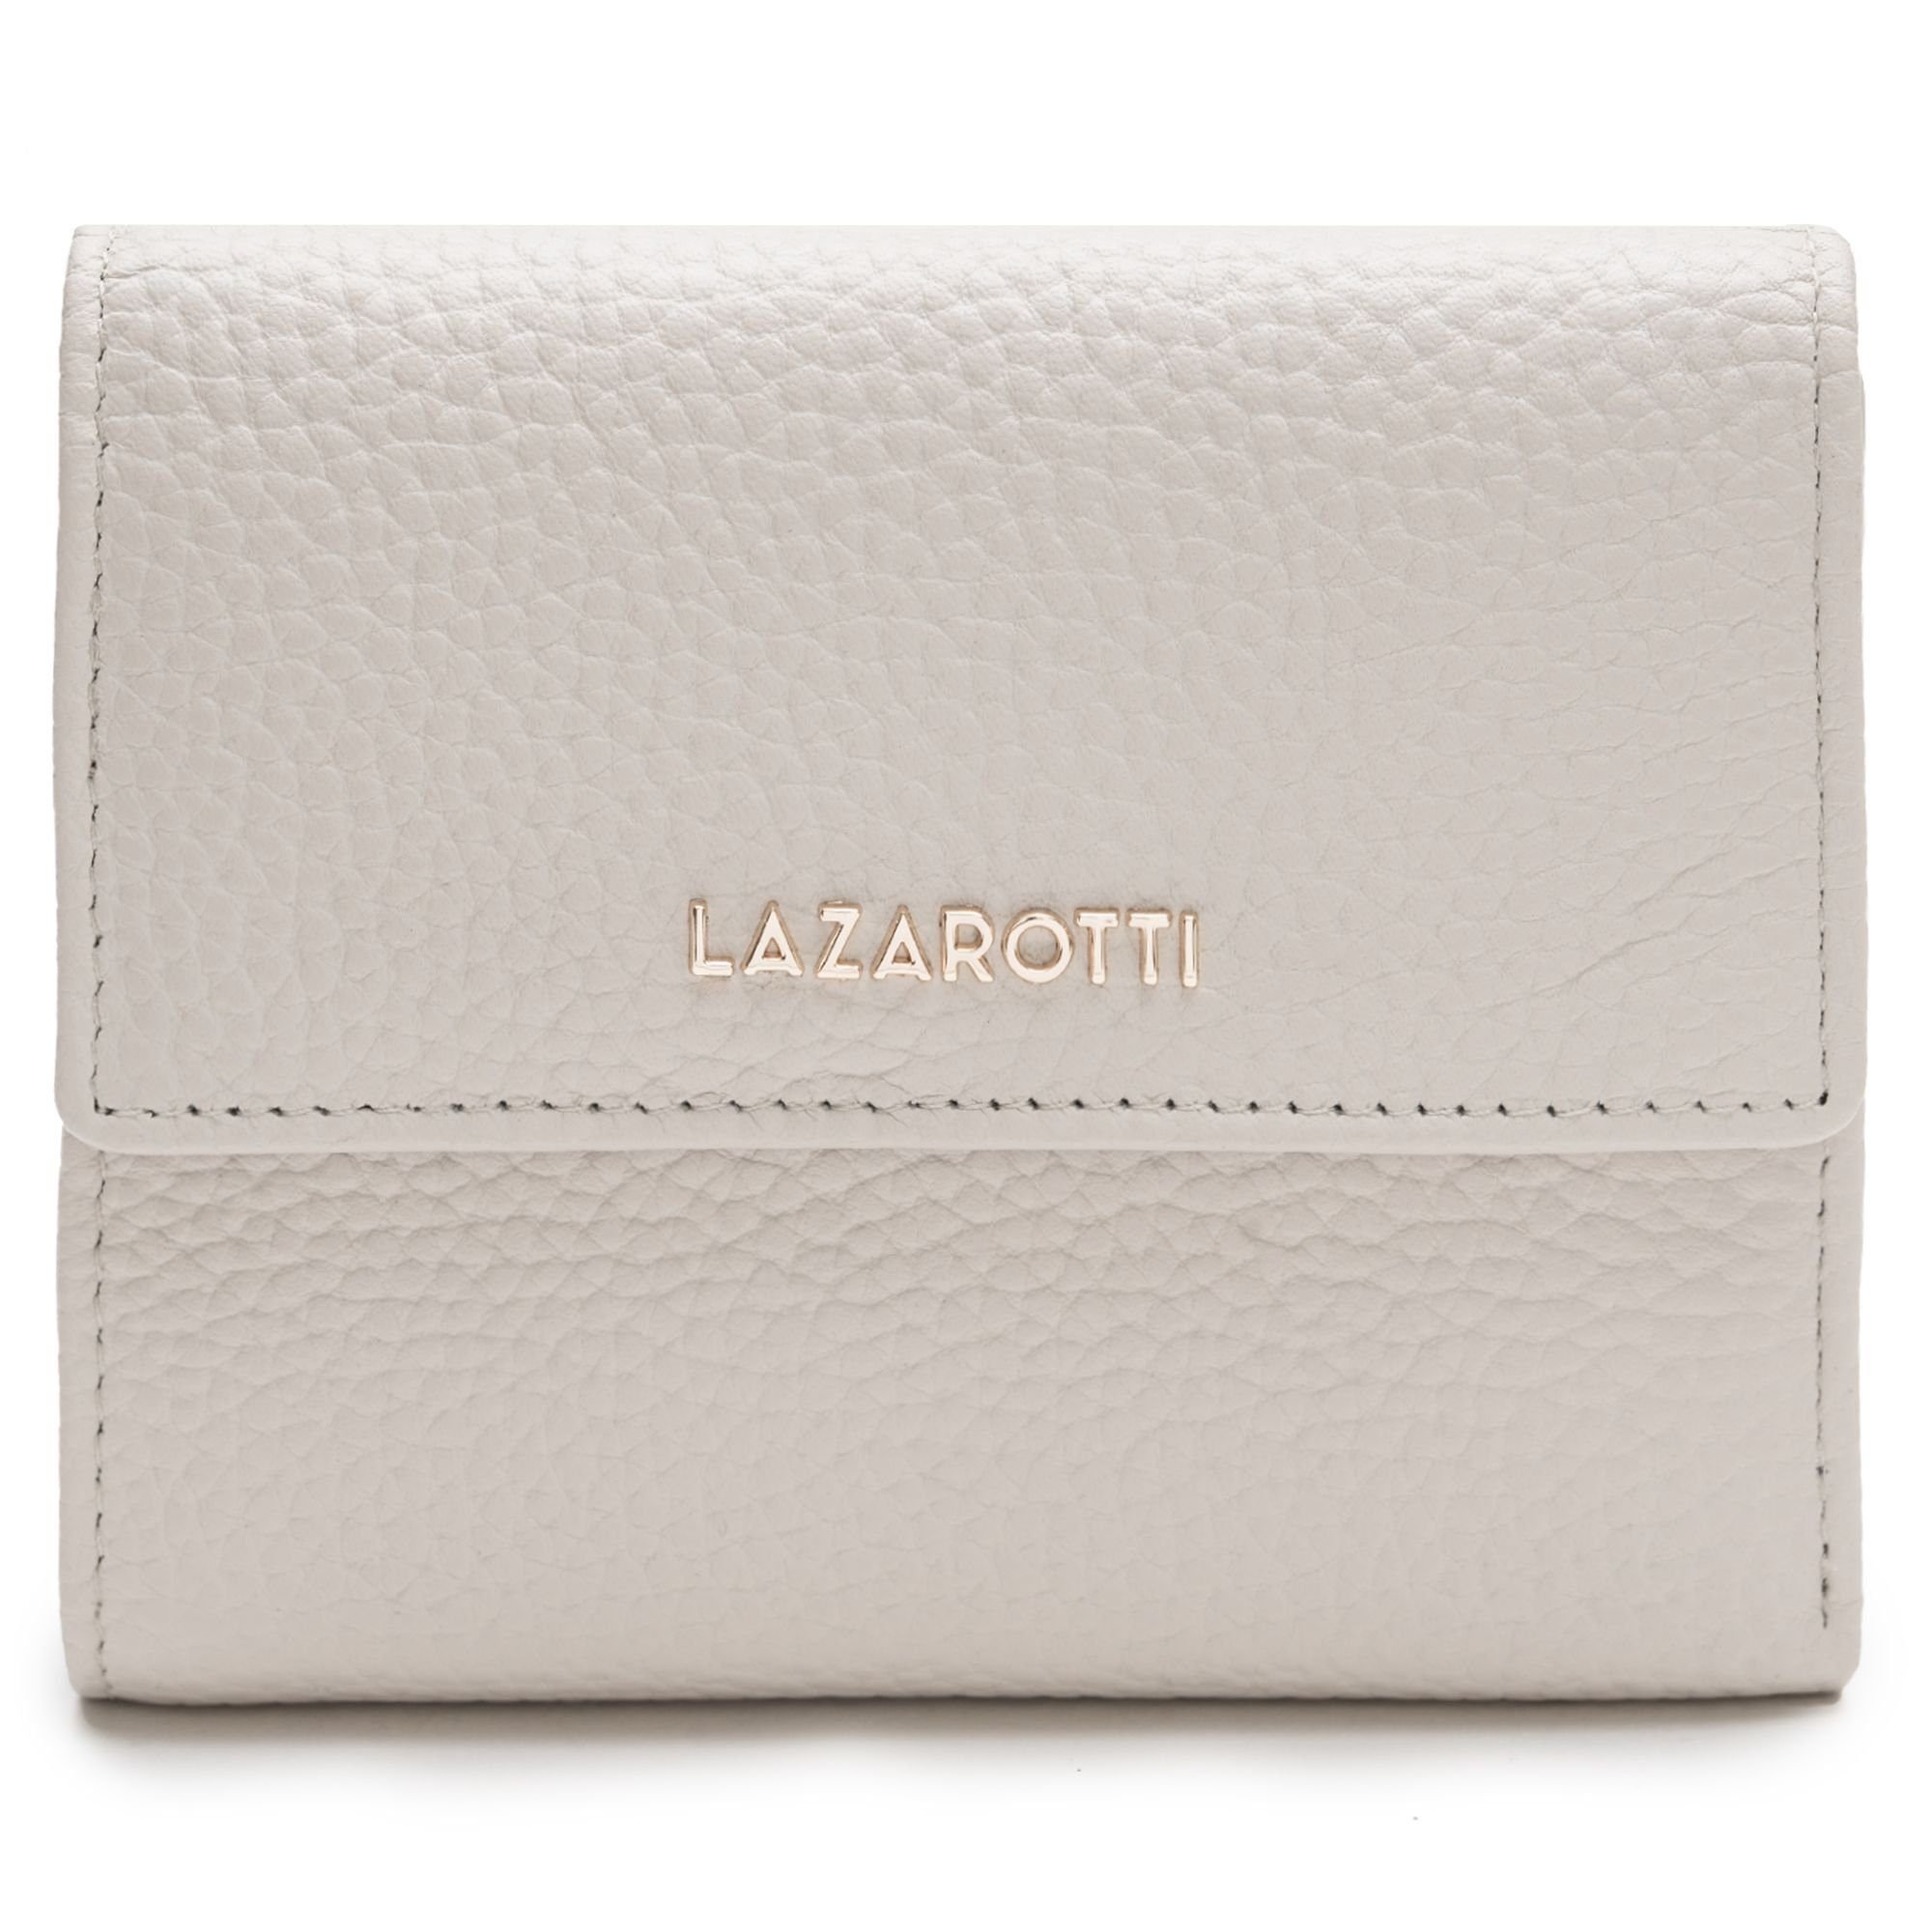 Lazarotti Geldbörse Bologna Leather, Leder offwhite